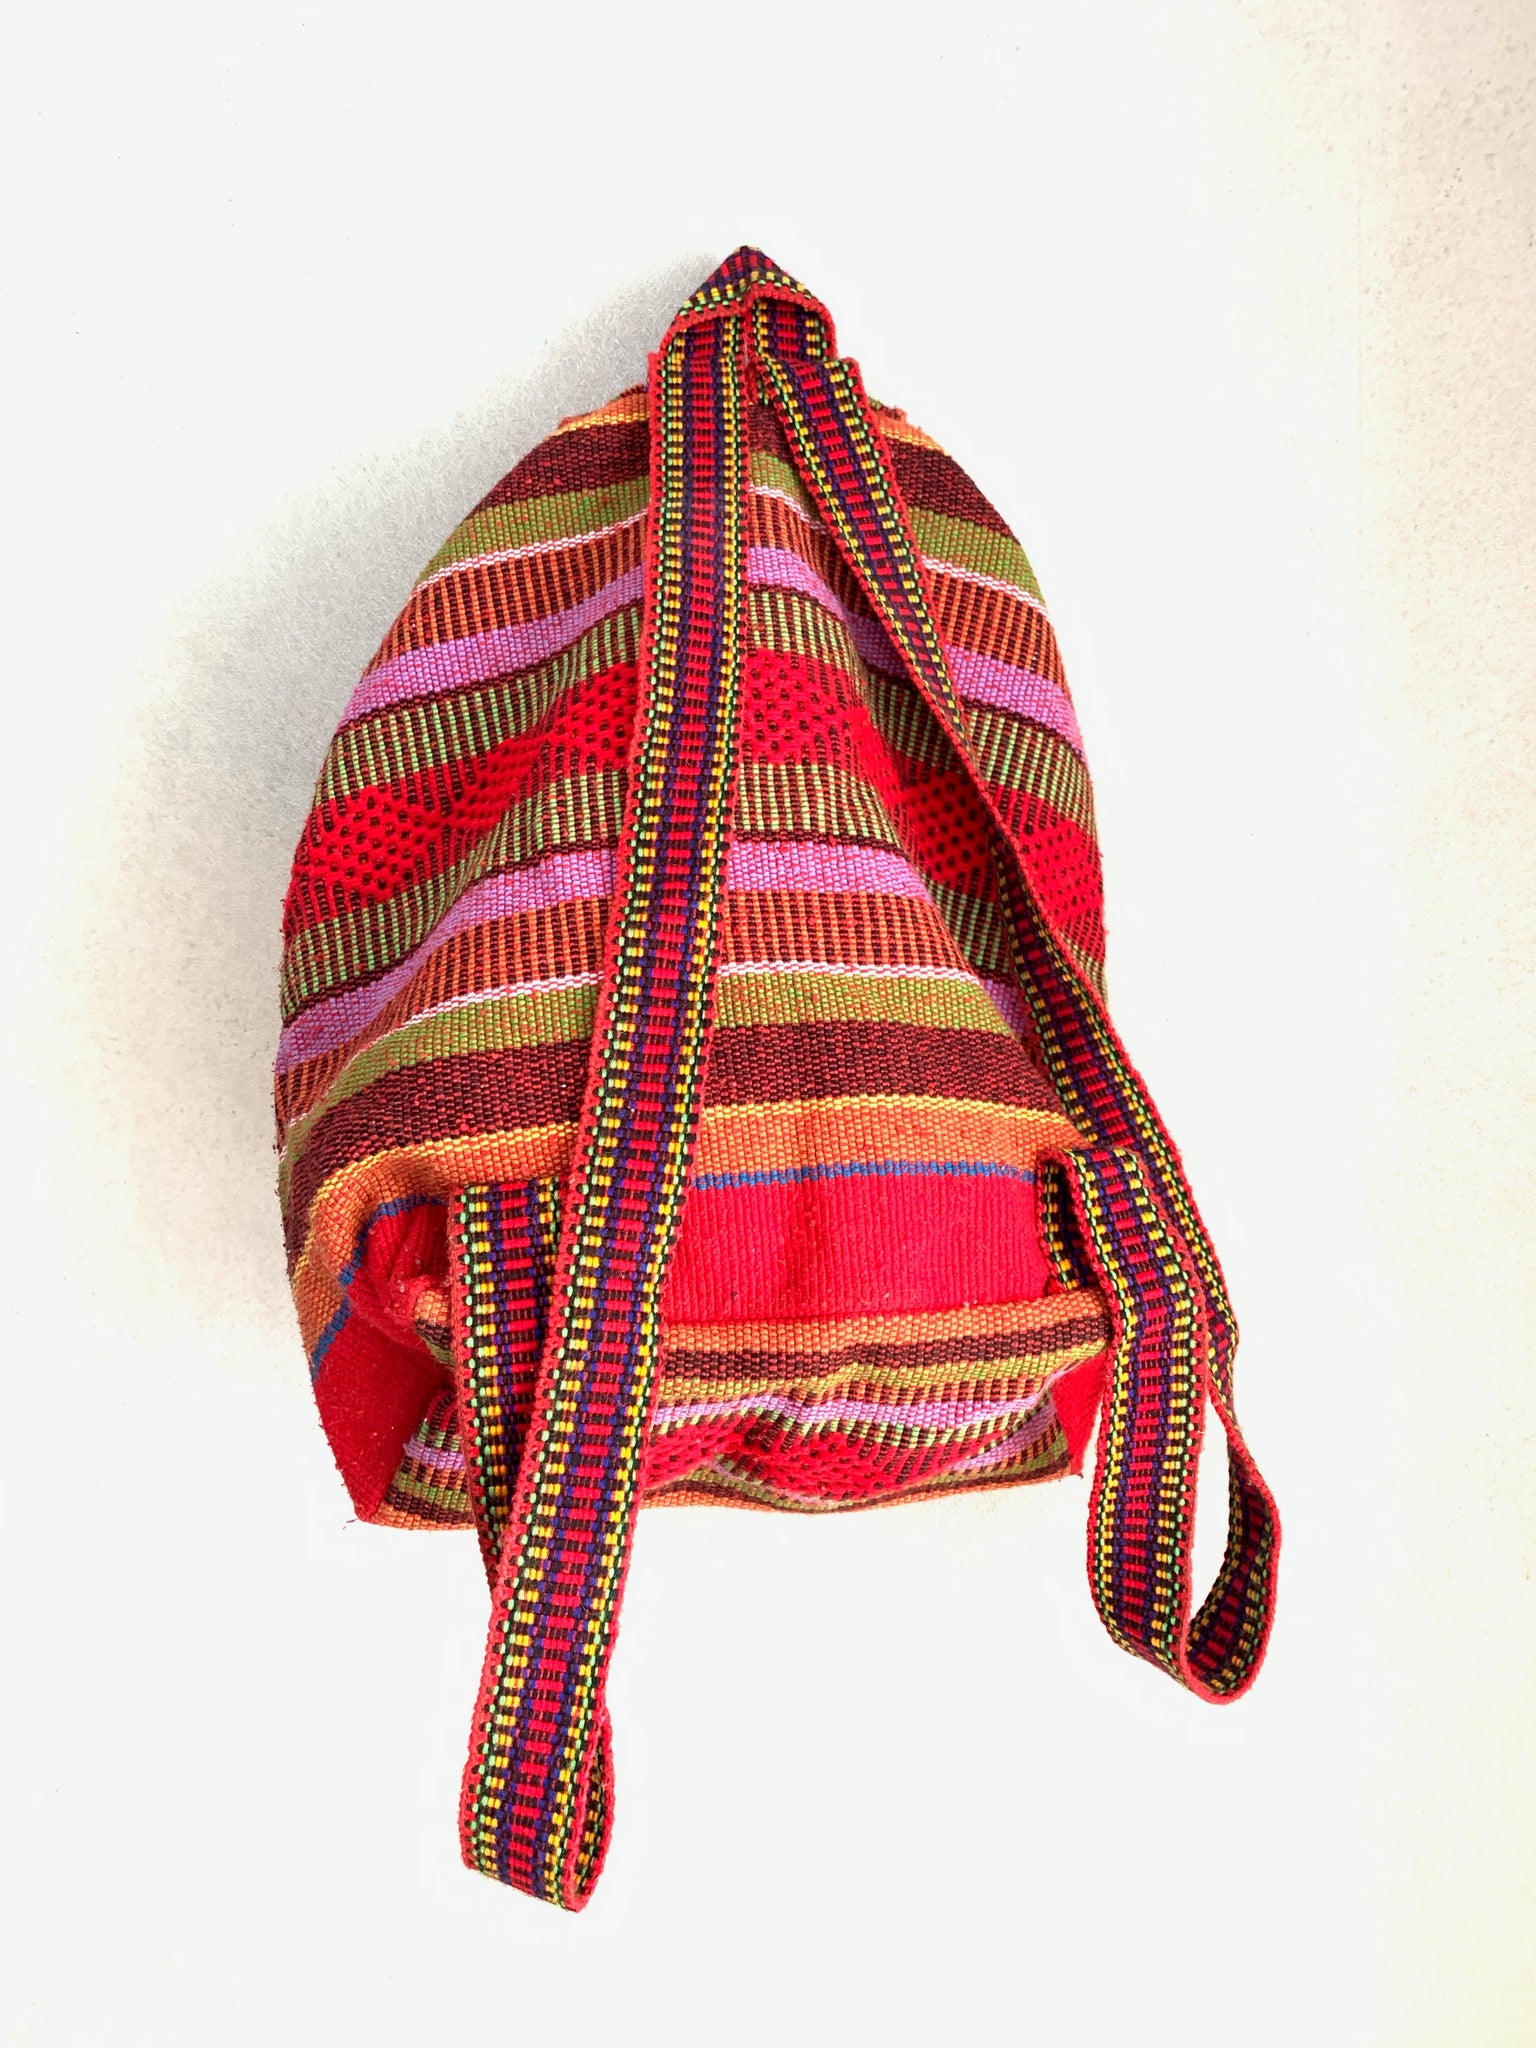 Handmade bag packs from Oaxaca